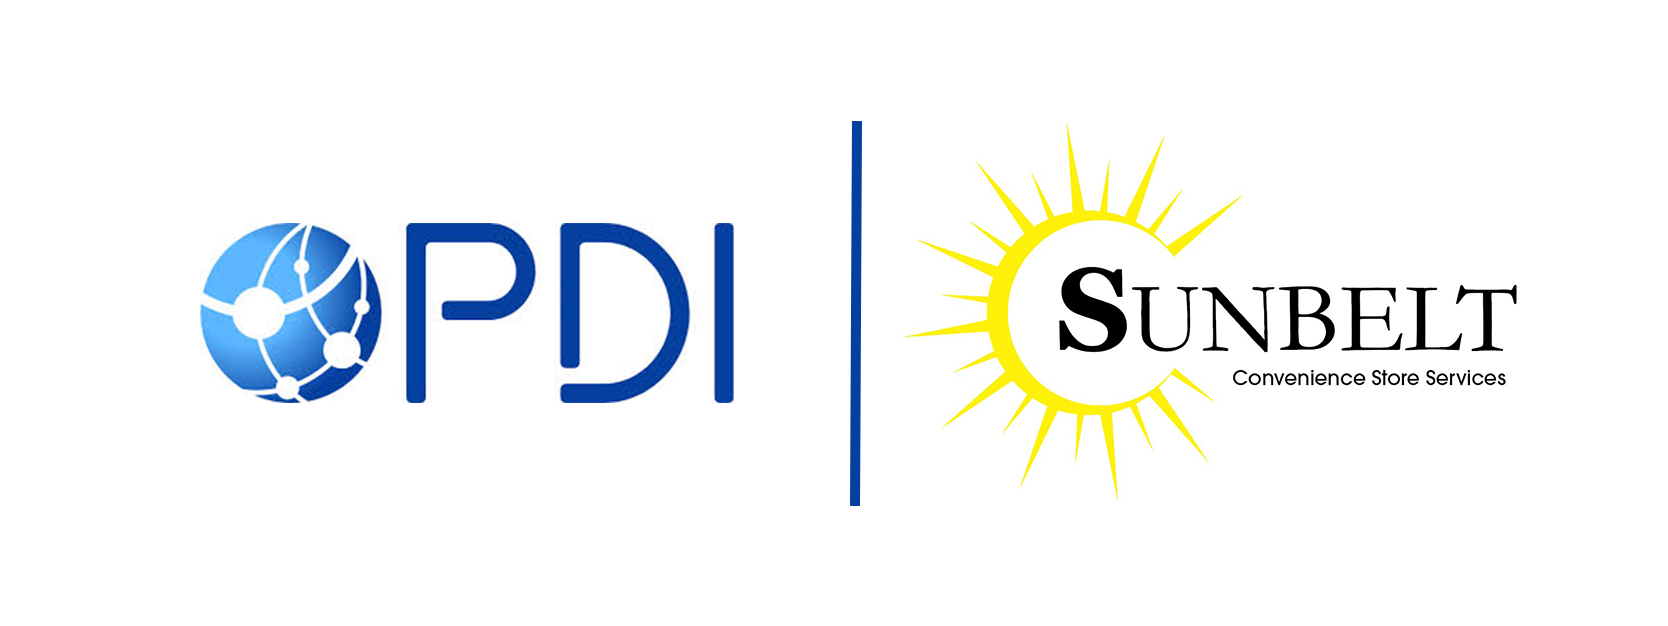 Sunbelt Partnership Logos_email banner